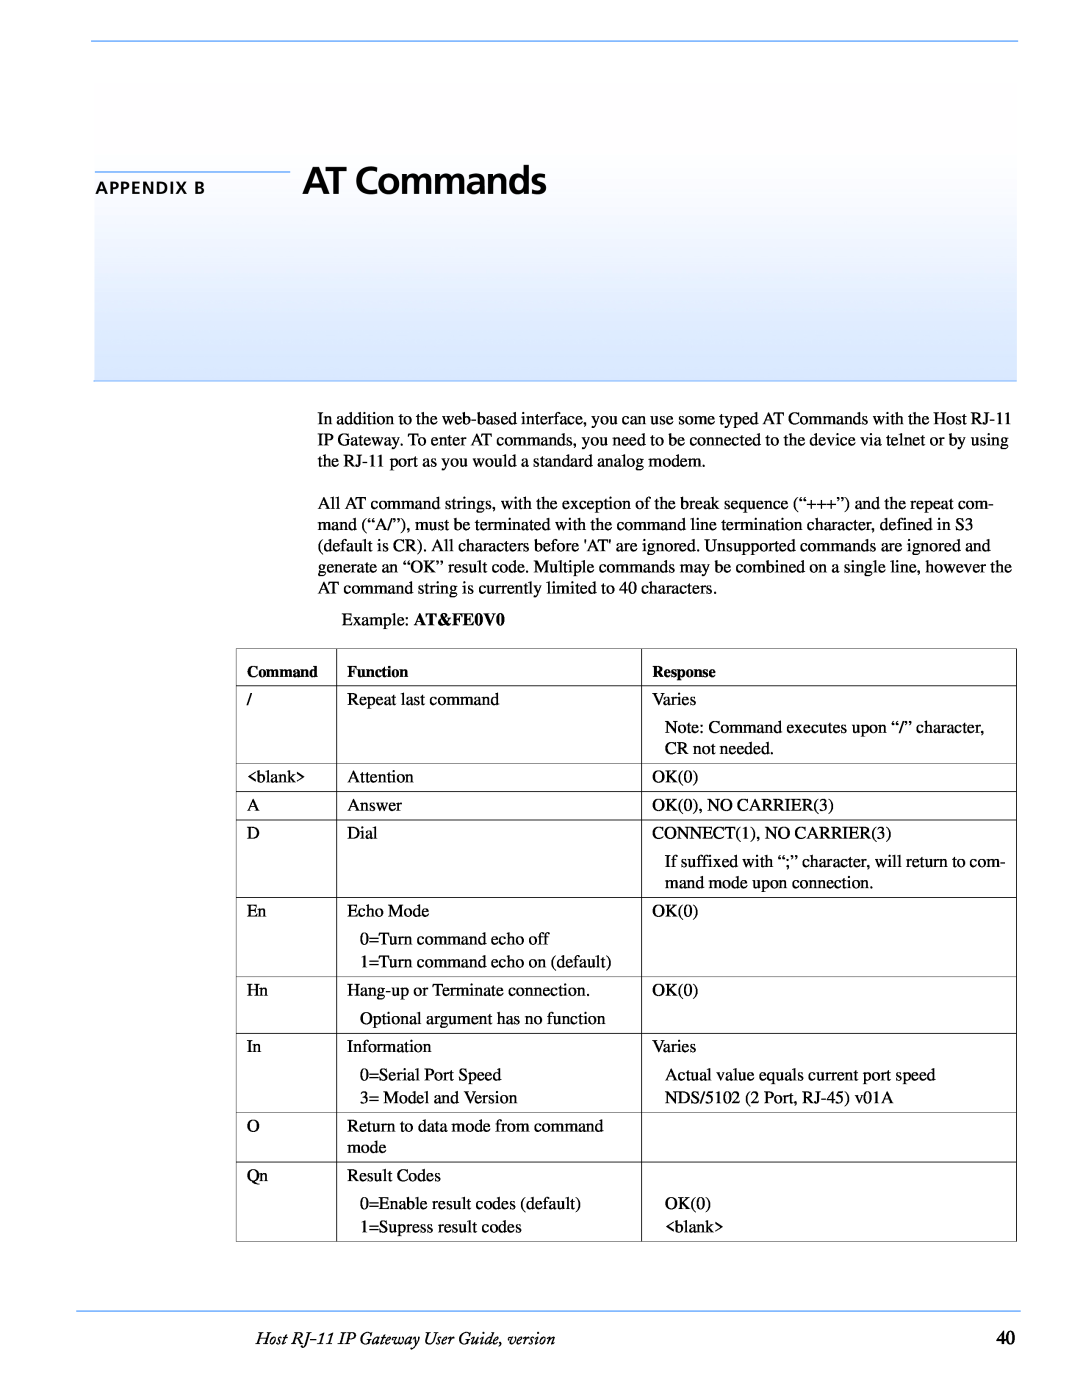 Airlink manual AT Commands, Appendix B, Host RJ-11 IP Gateway User Guide, version 